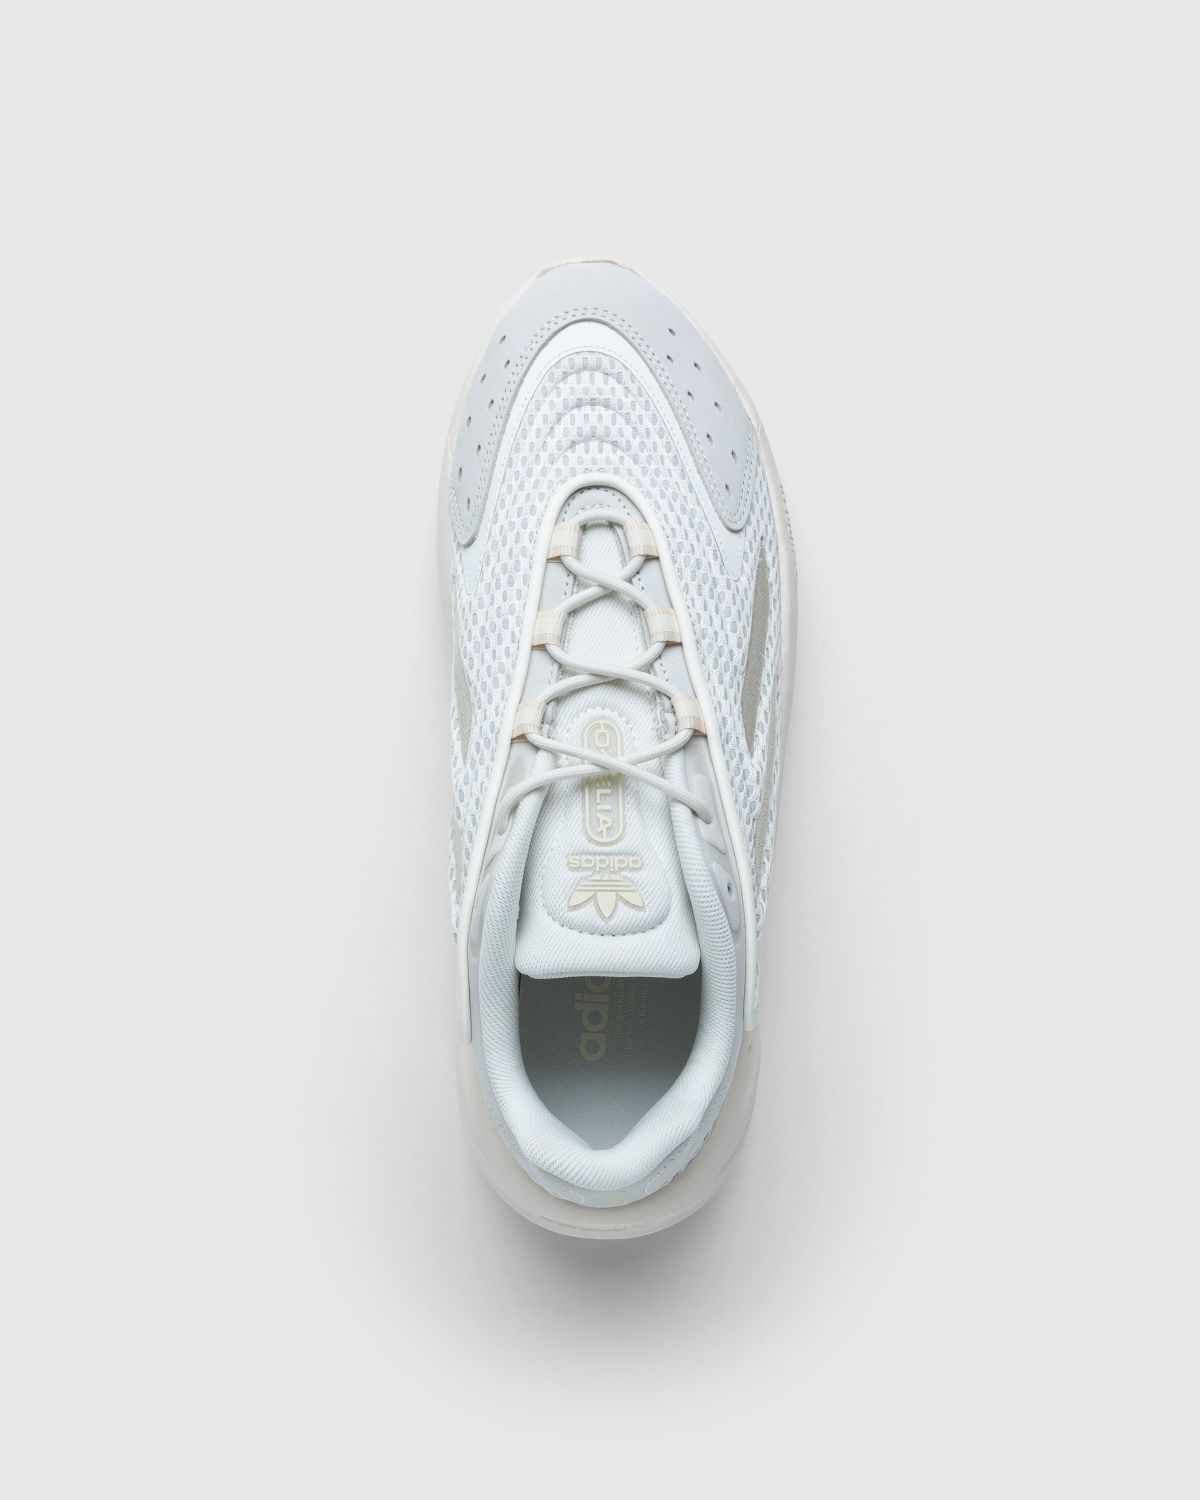 Adidas – Ozelia Off White/White - Low Top Sneakers - Beige - Image 5